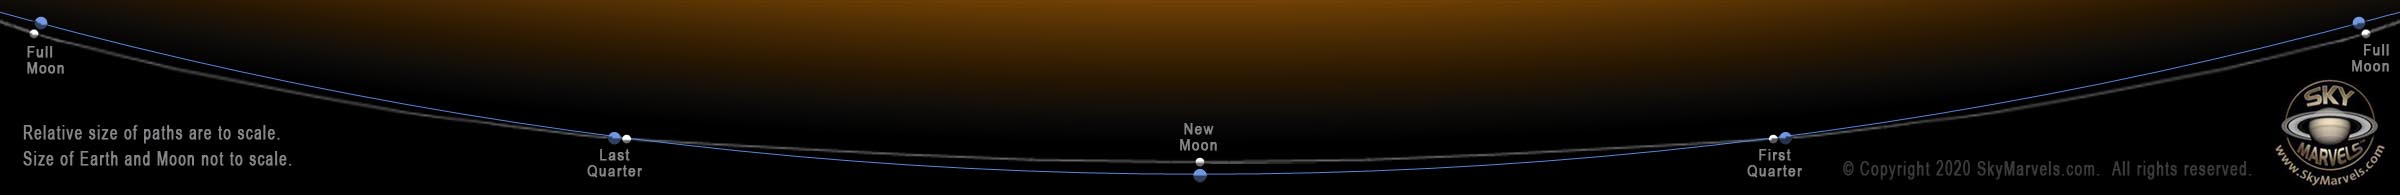 Moon Portal Texting Simulator